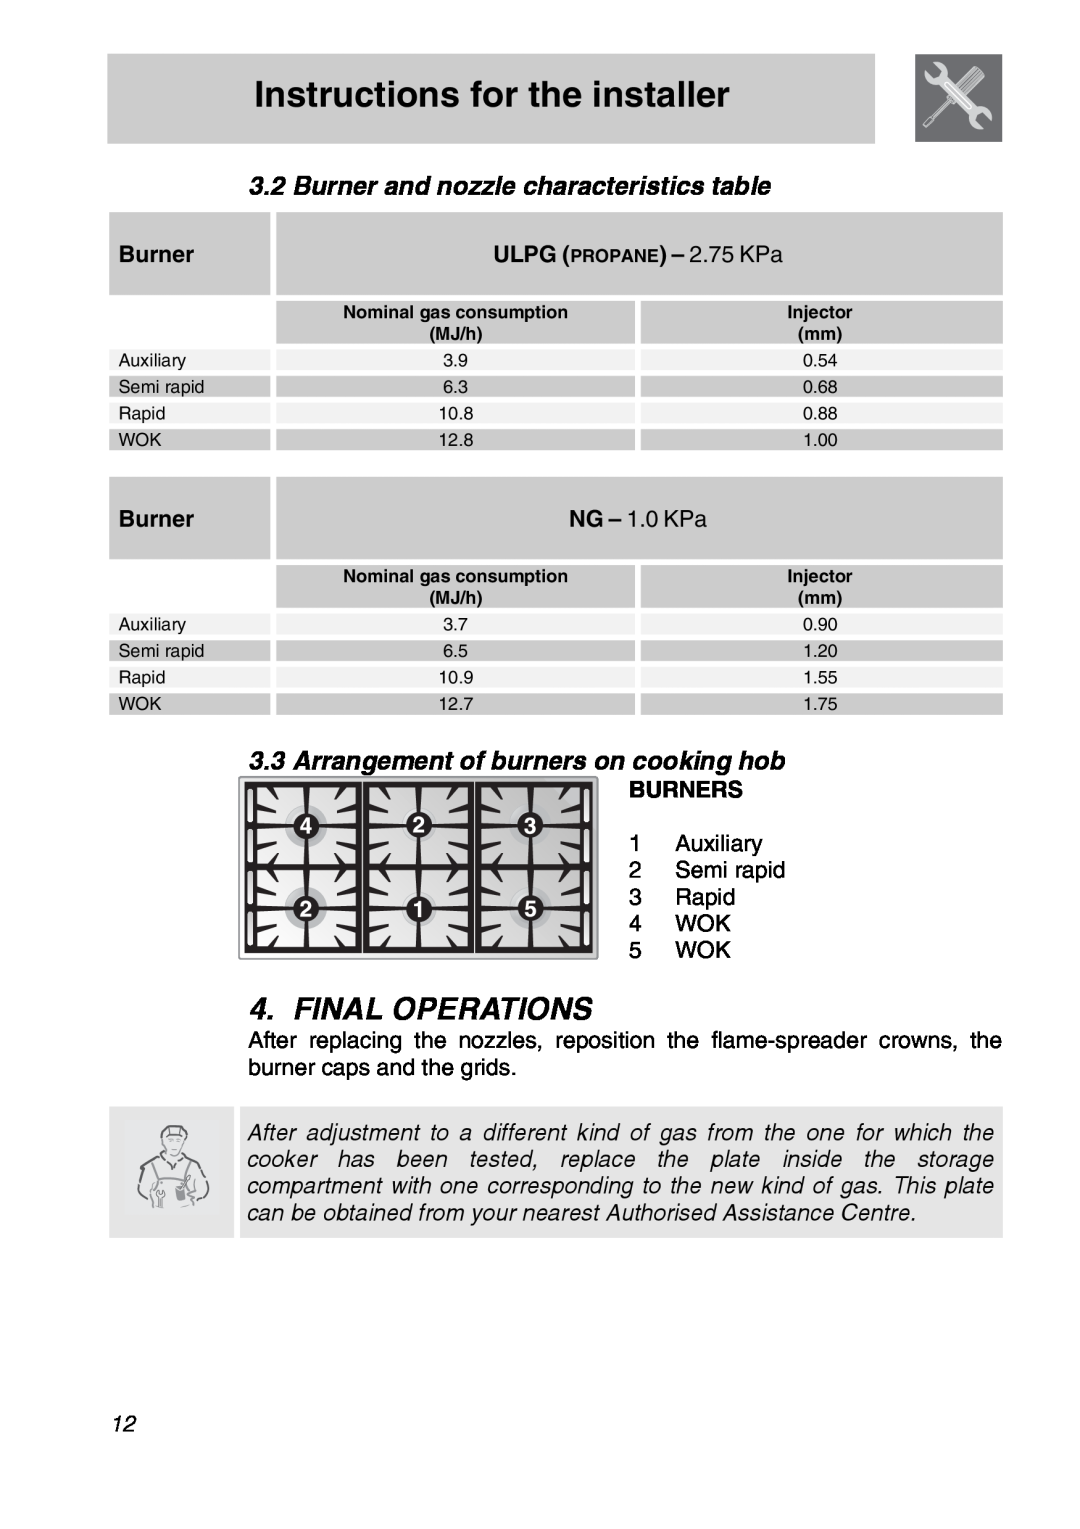 Smeg A21X-6 Final Operations, Burner and nozzle characteristics table, 3.3Arrangement of burners on cooking hob, Burners 